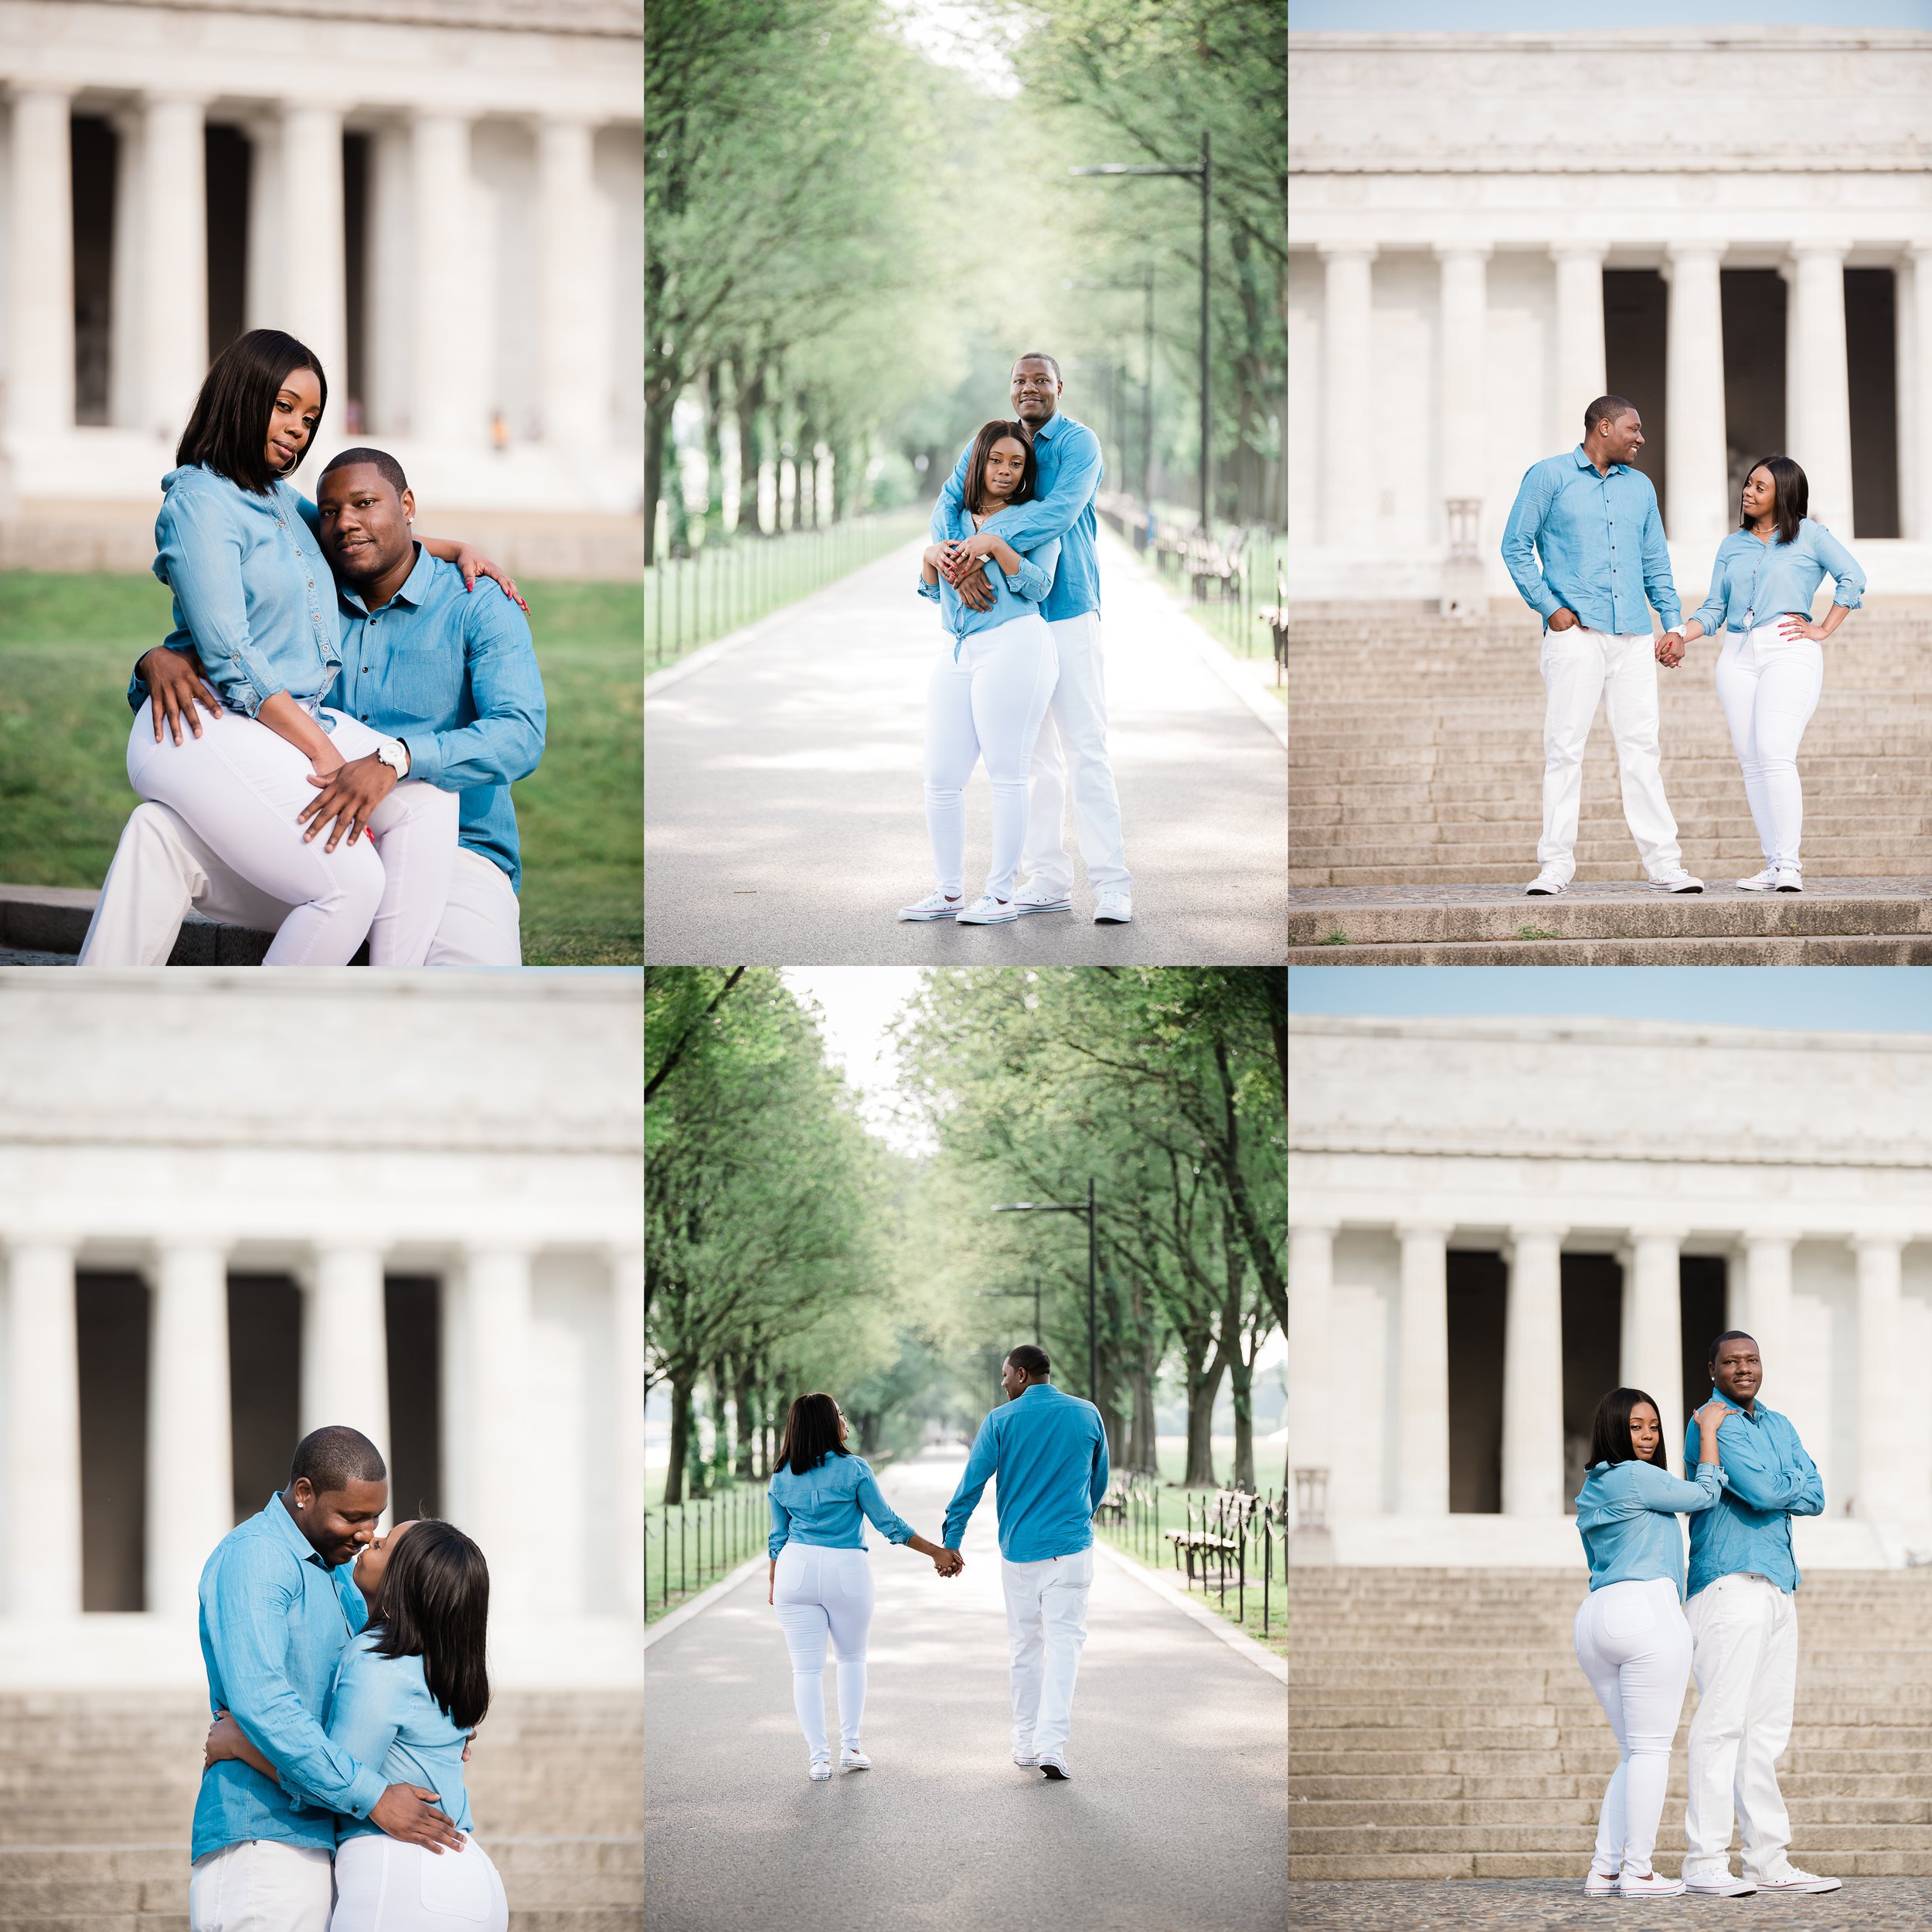 Lincoln Memorial Photography